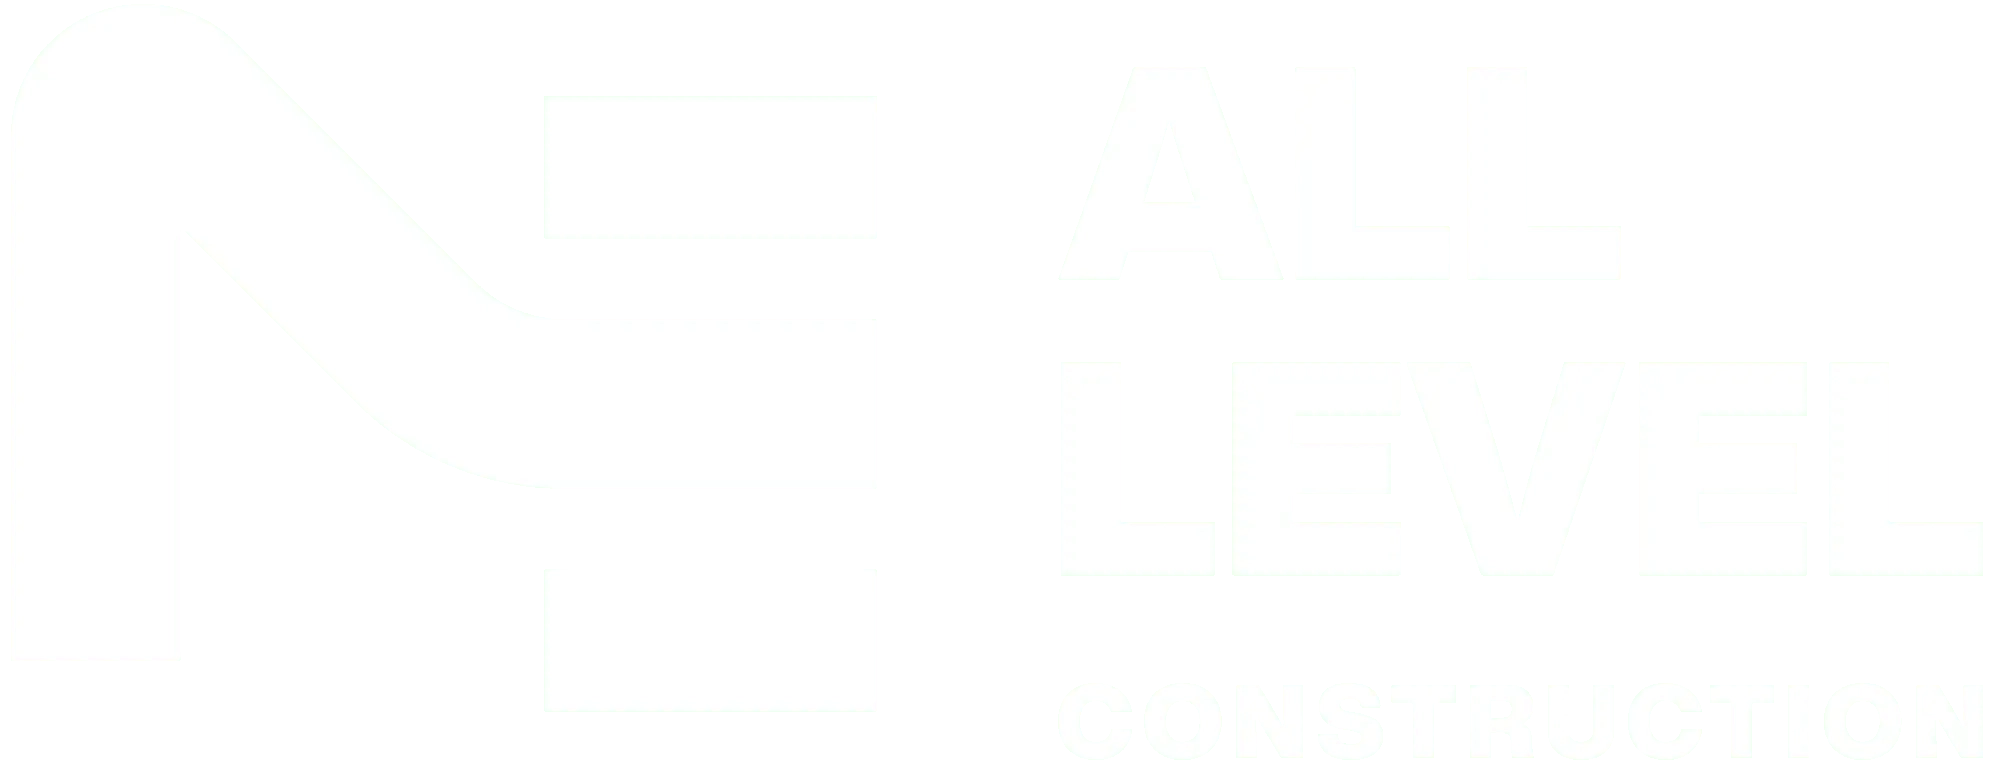 All-Level Construction LLC Logo